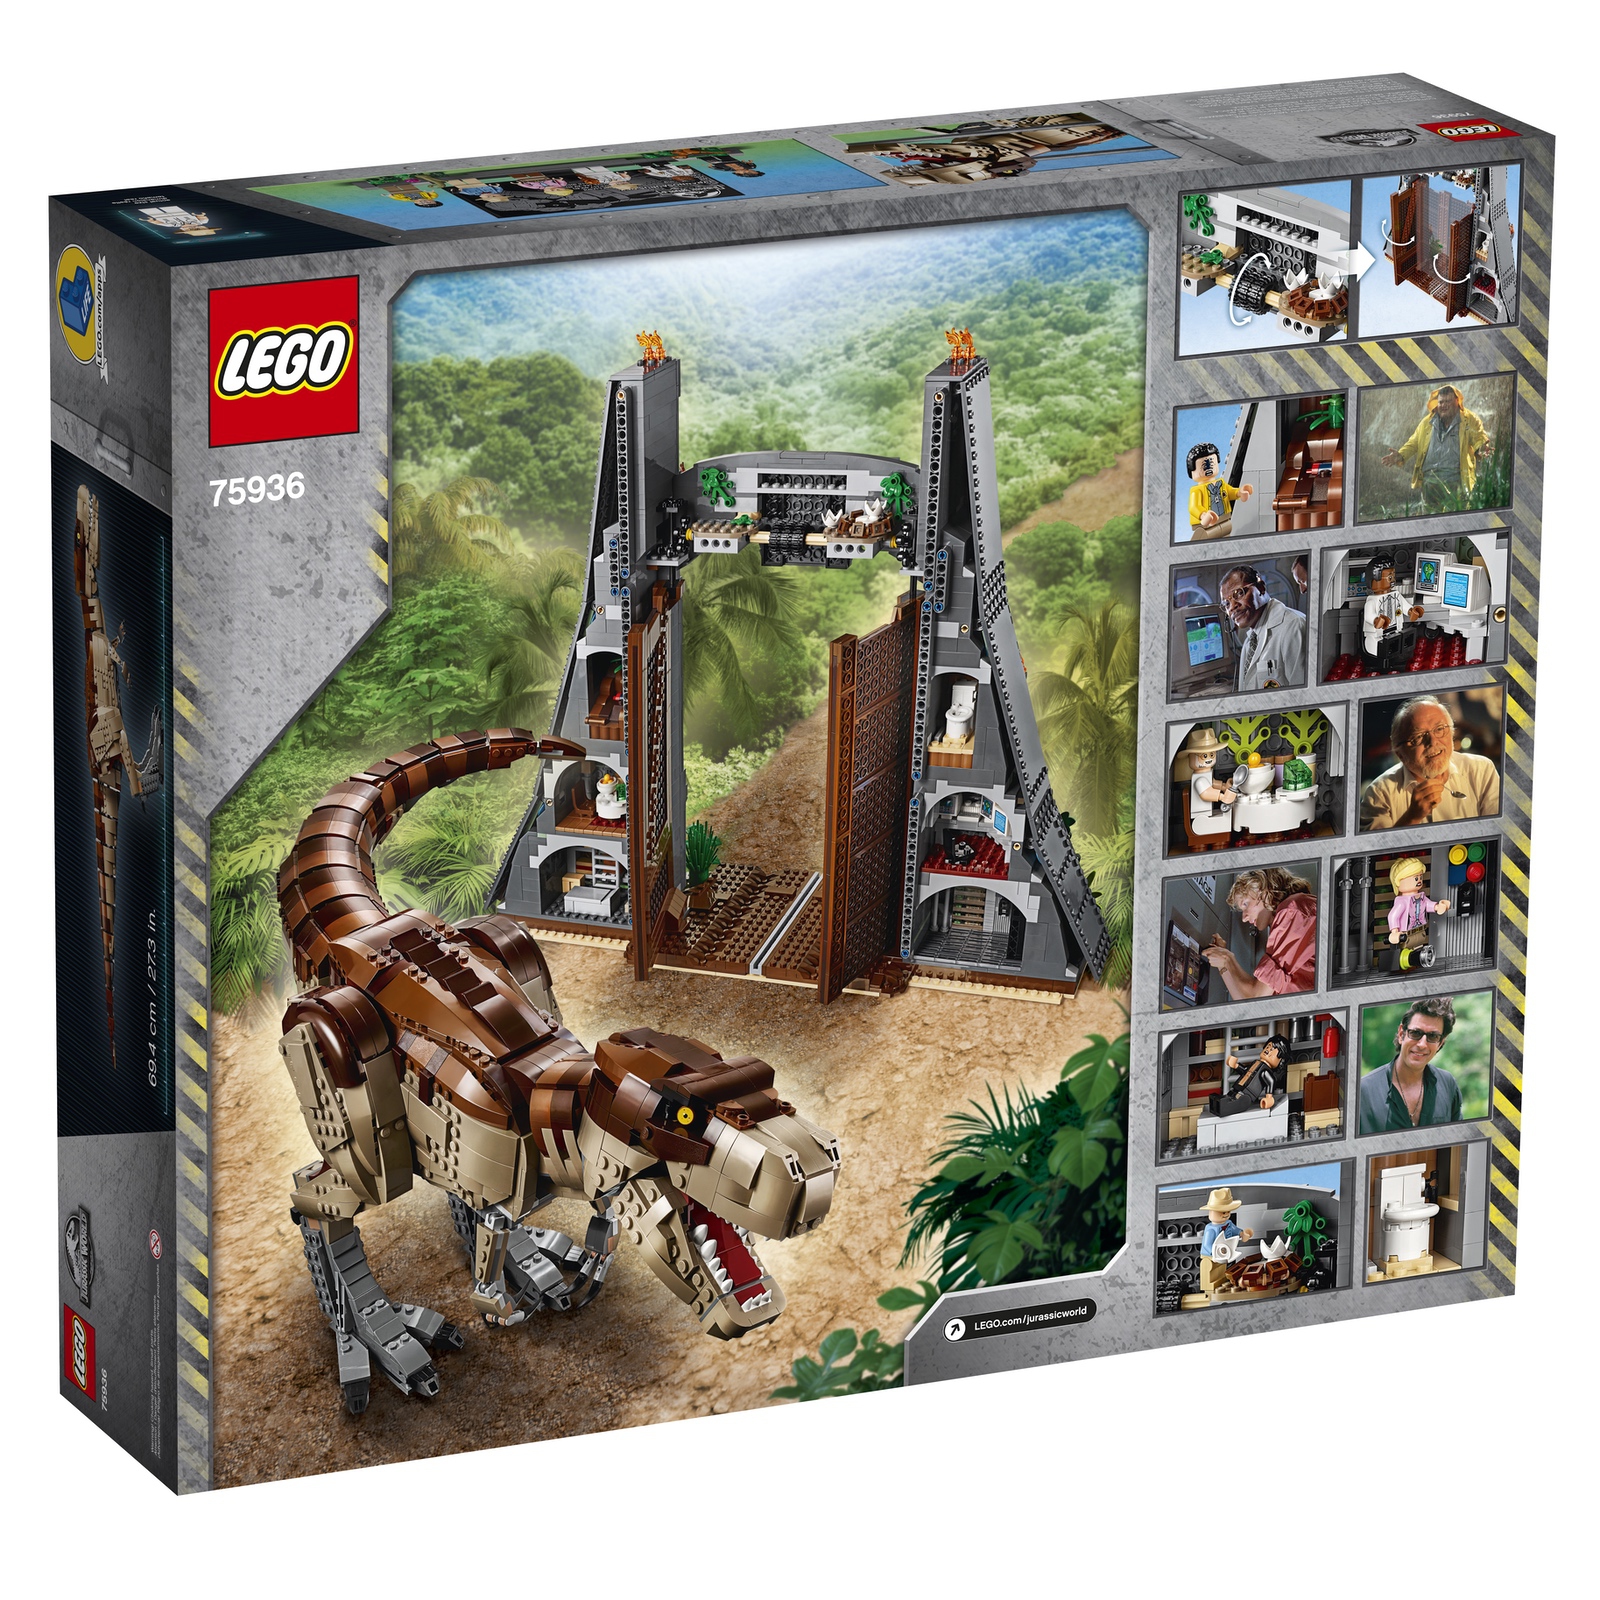 LEGO announces new Jurassic Park T. rex set The Nerdy